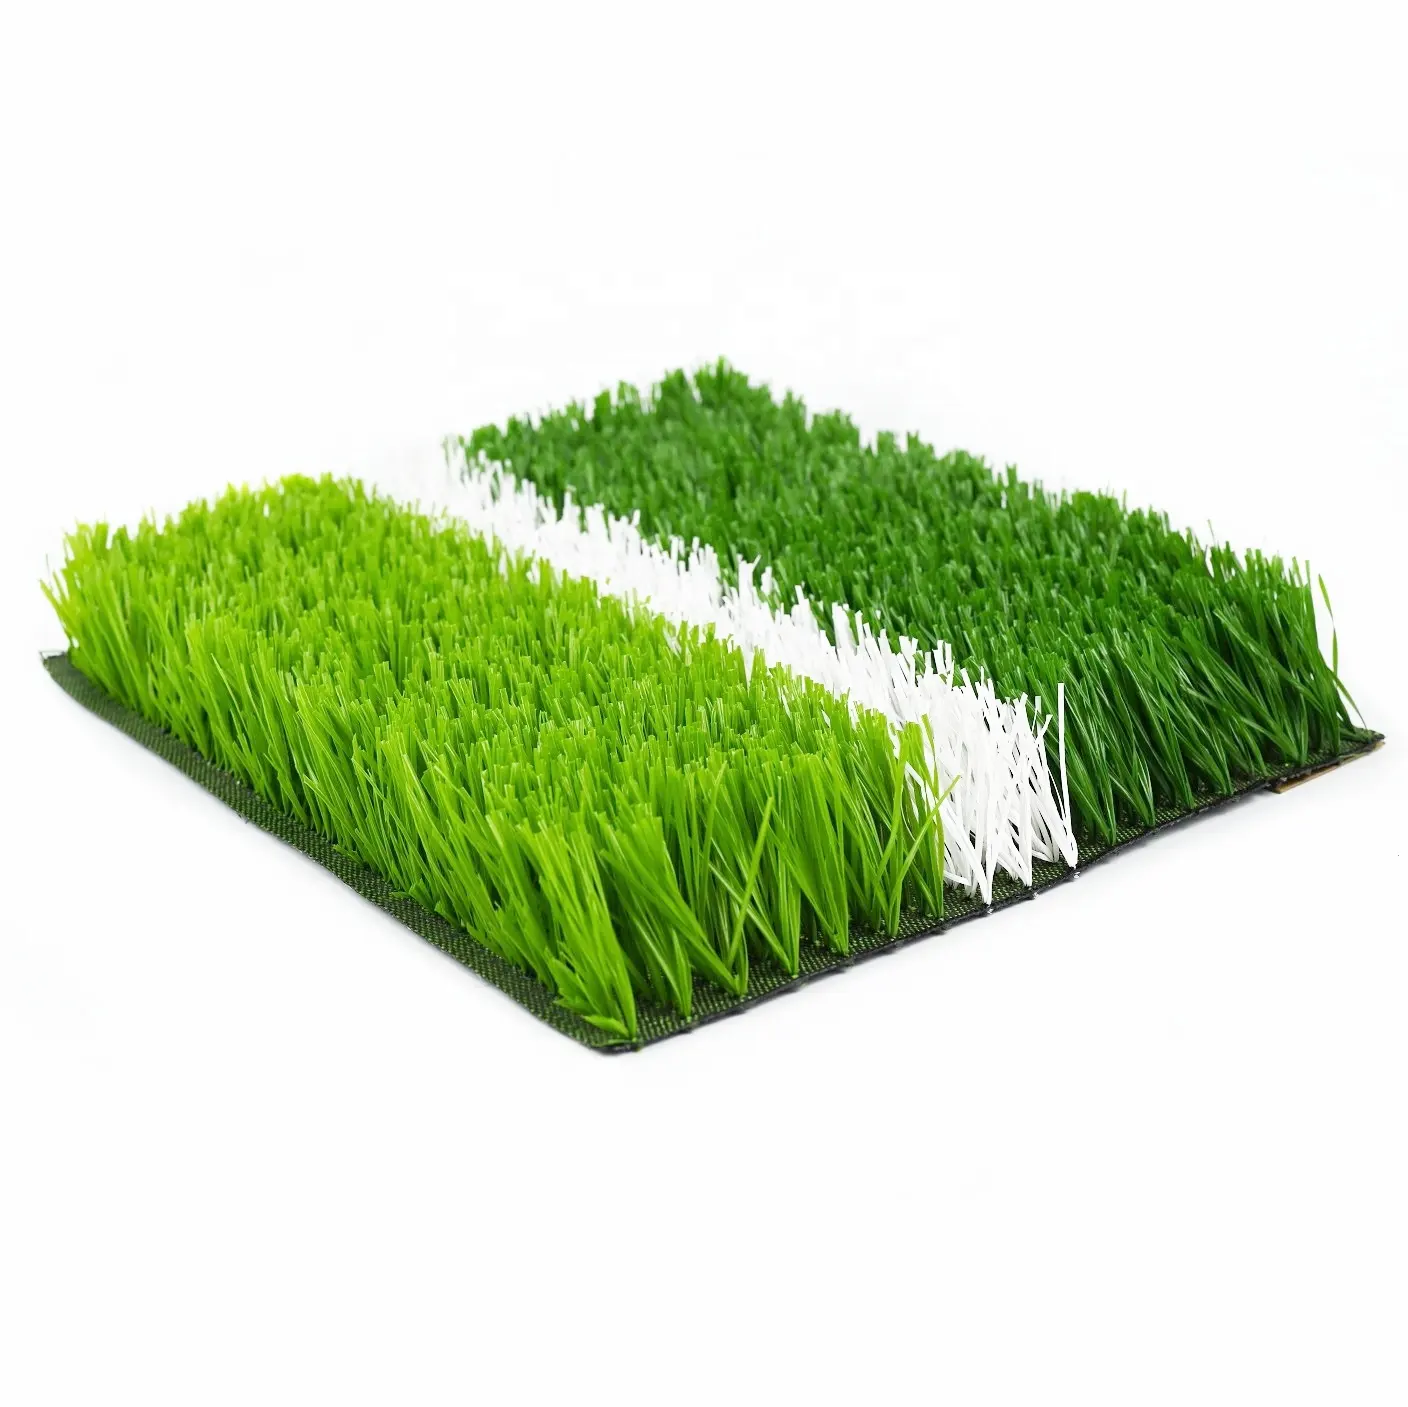 Mini equipment manufacture soccer field plastic mat sport flooring lawn carpet football price artificial turf grass for pla